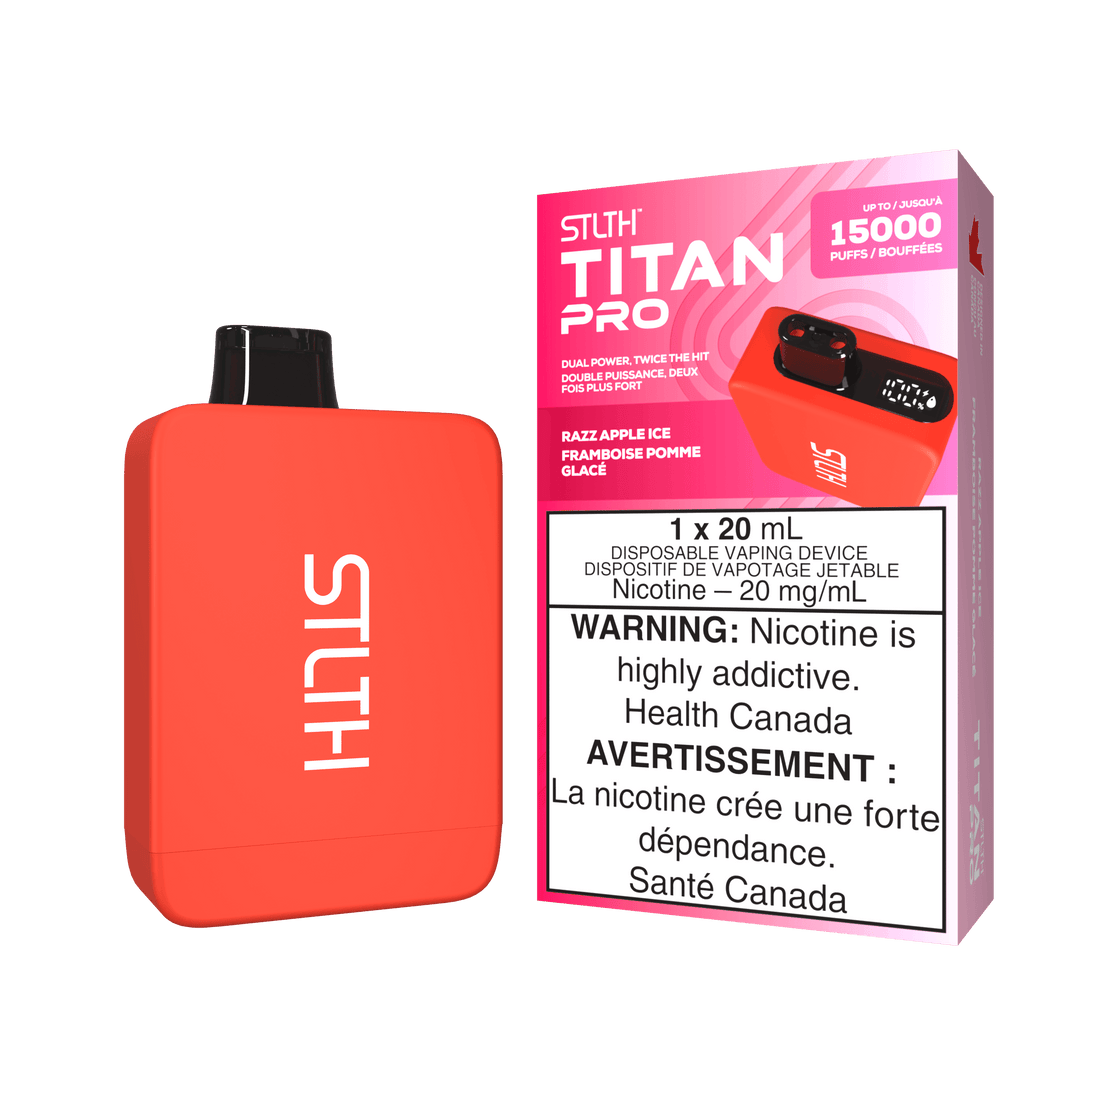 STLTH Titan Pro - Razz Apple Ice - Vapor Shoppe